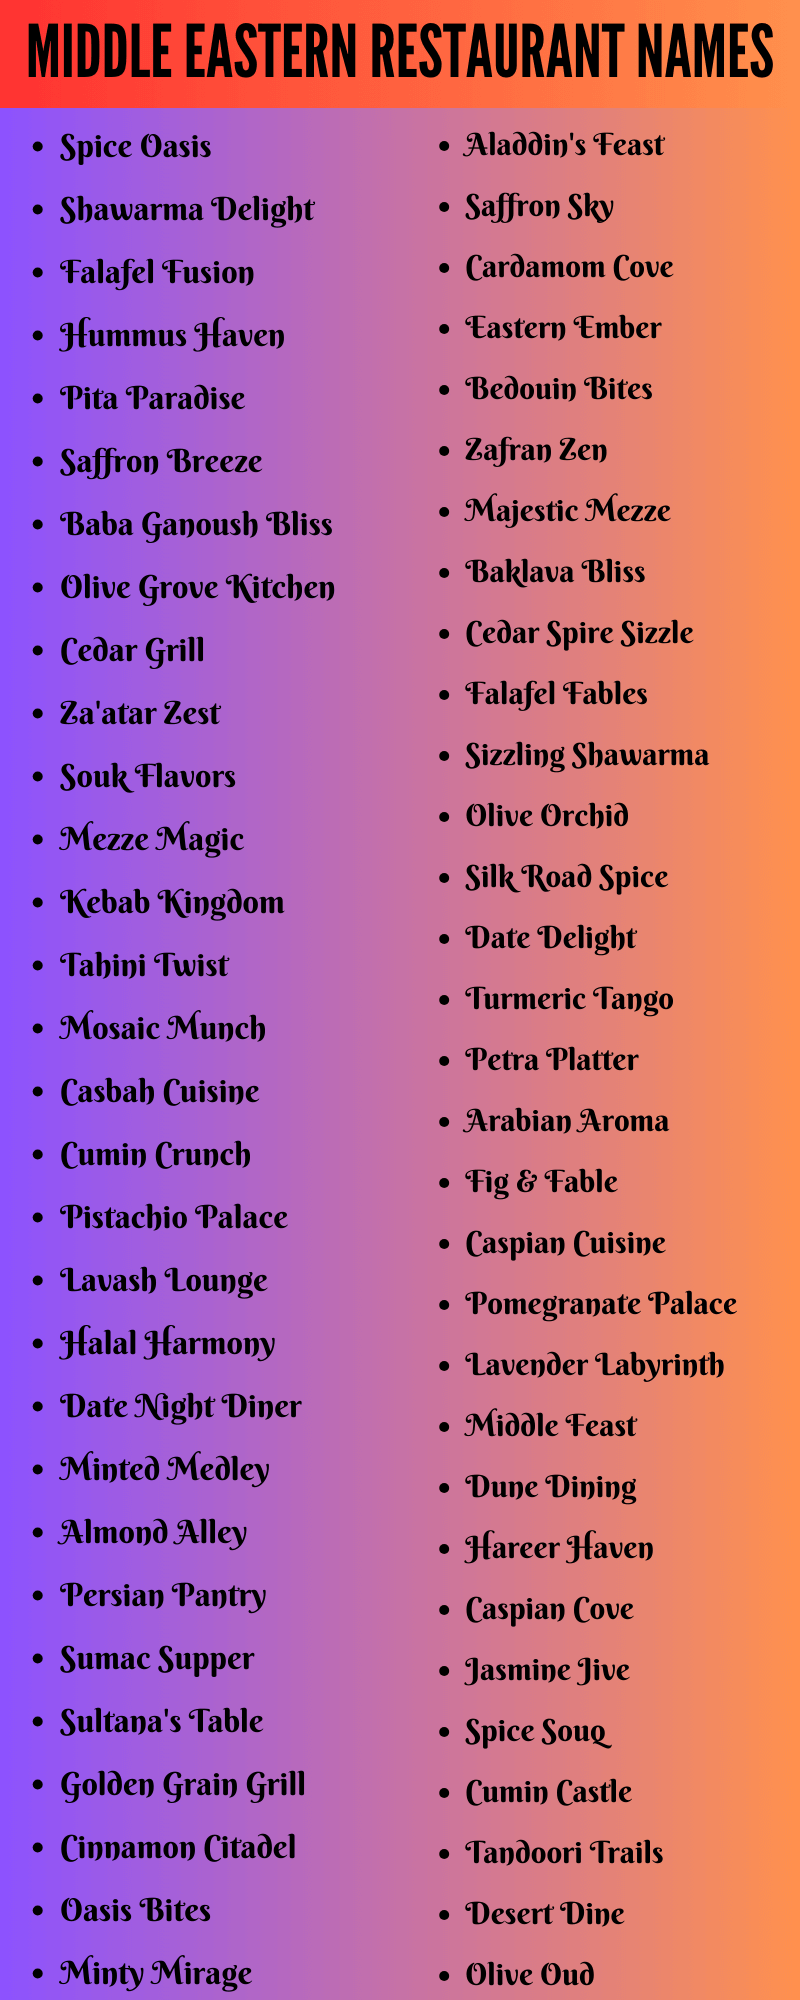 Middle Eastern Restaurant Names